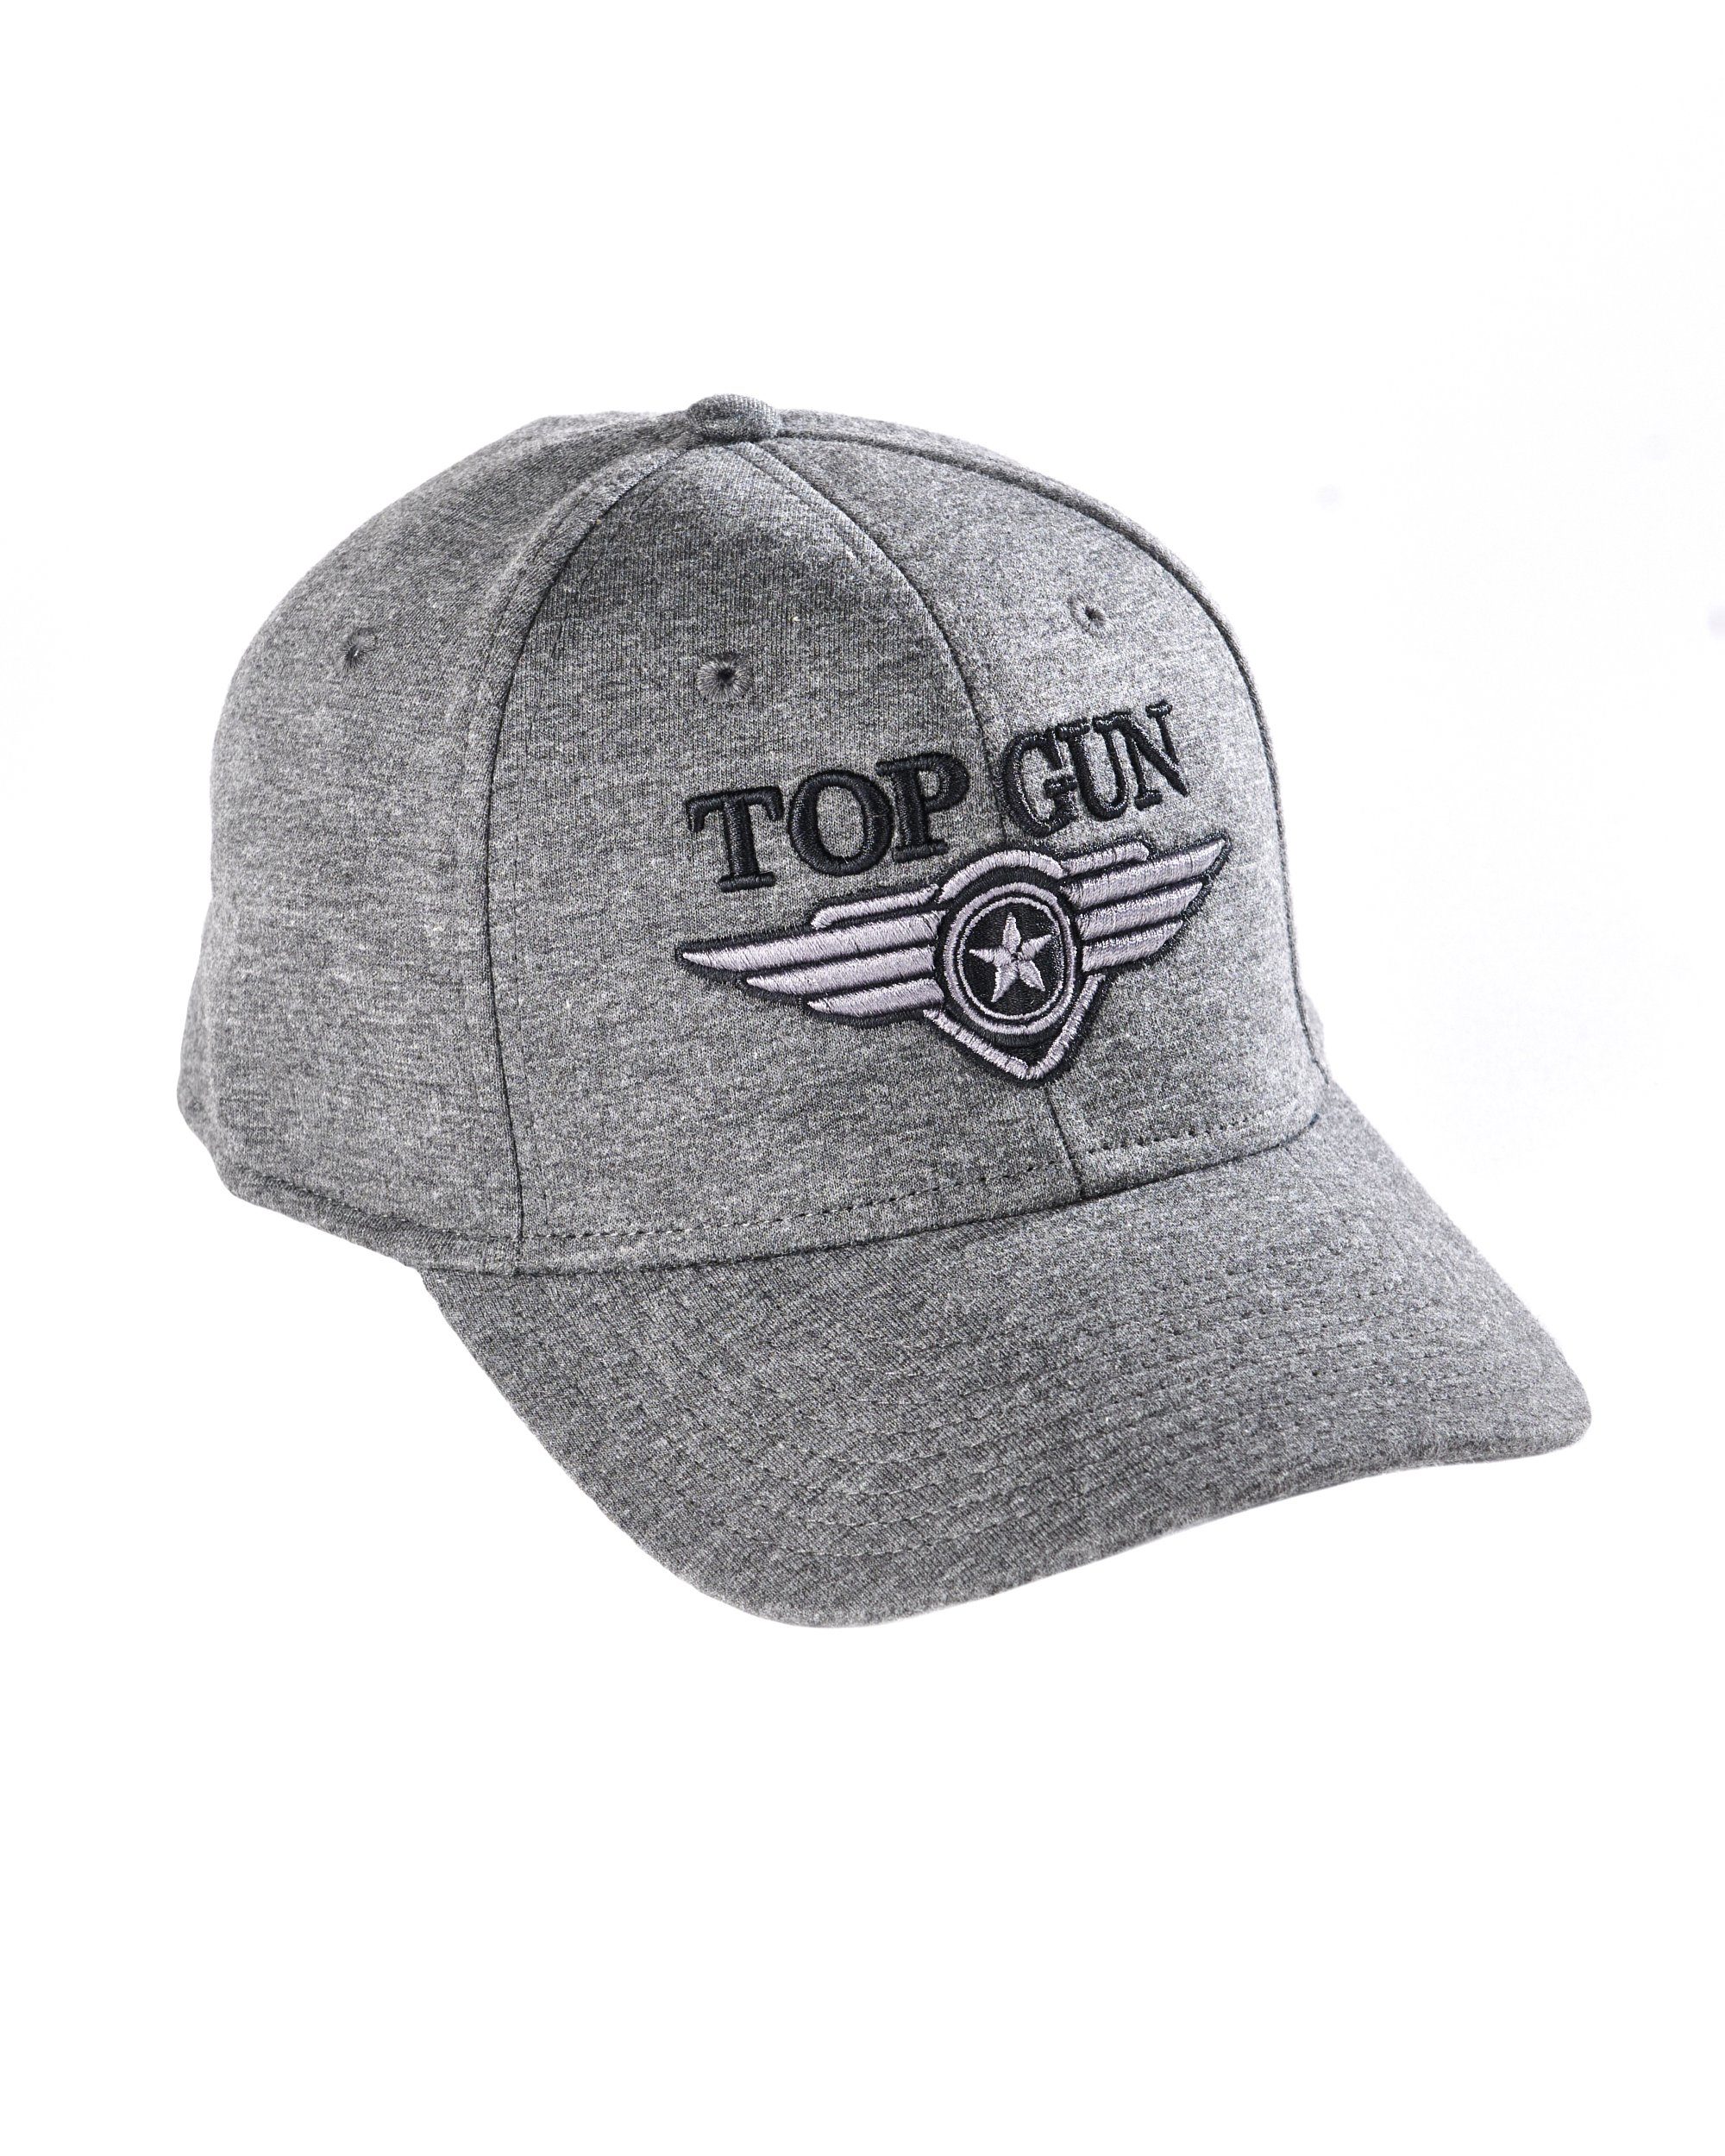 Snapback Cap Größenverstellbar Snapback GUN TG20193167, TOP Einfach